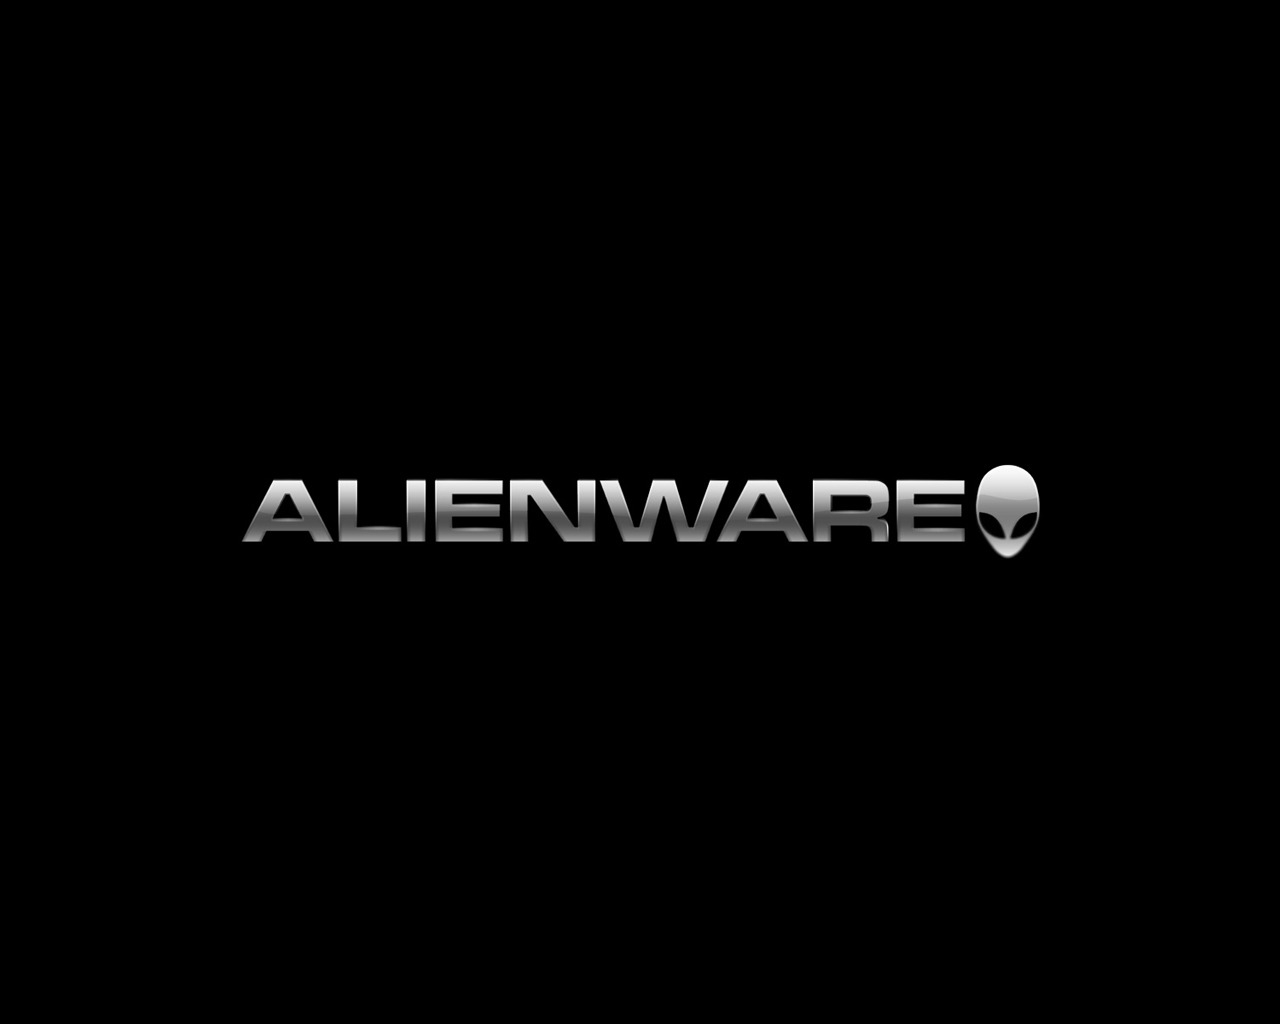 Black Alienware for 1280 x 1024 resolution